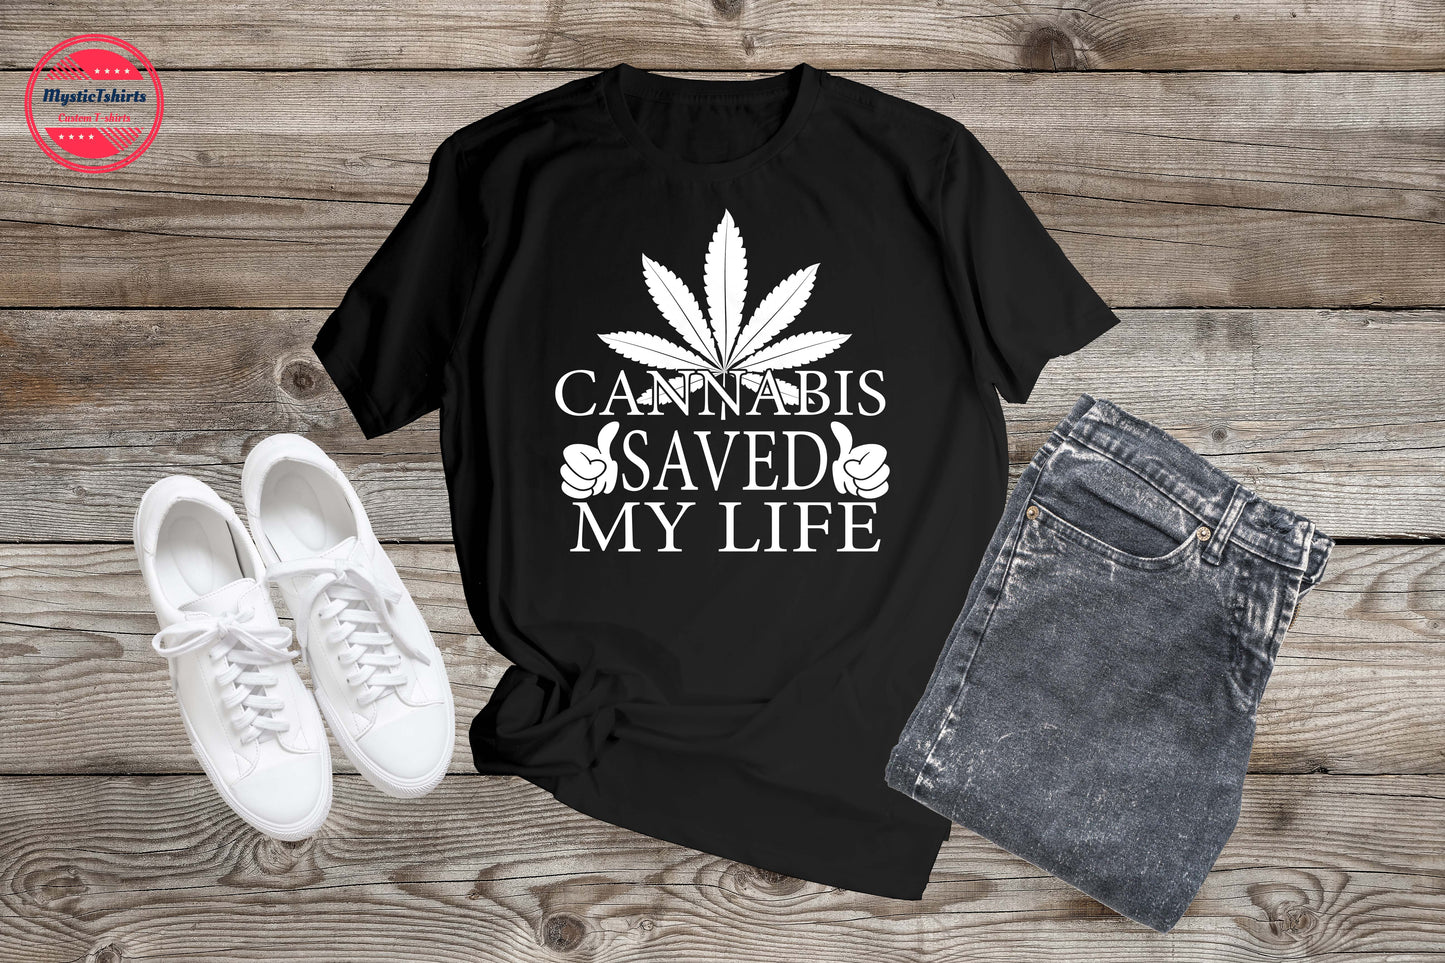 050. CANNABIS SAVED MY LIFE, Custom Made Shirt, Personalized T-Shirt, Custom Text, Make Your Own Shirt, Custom Tee